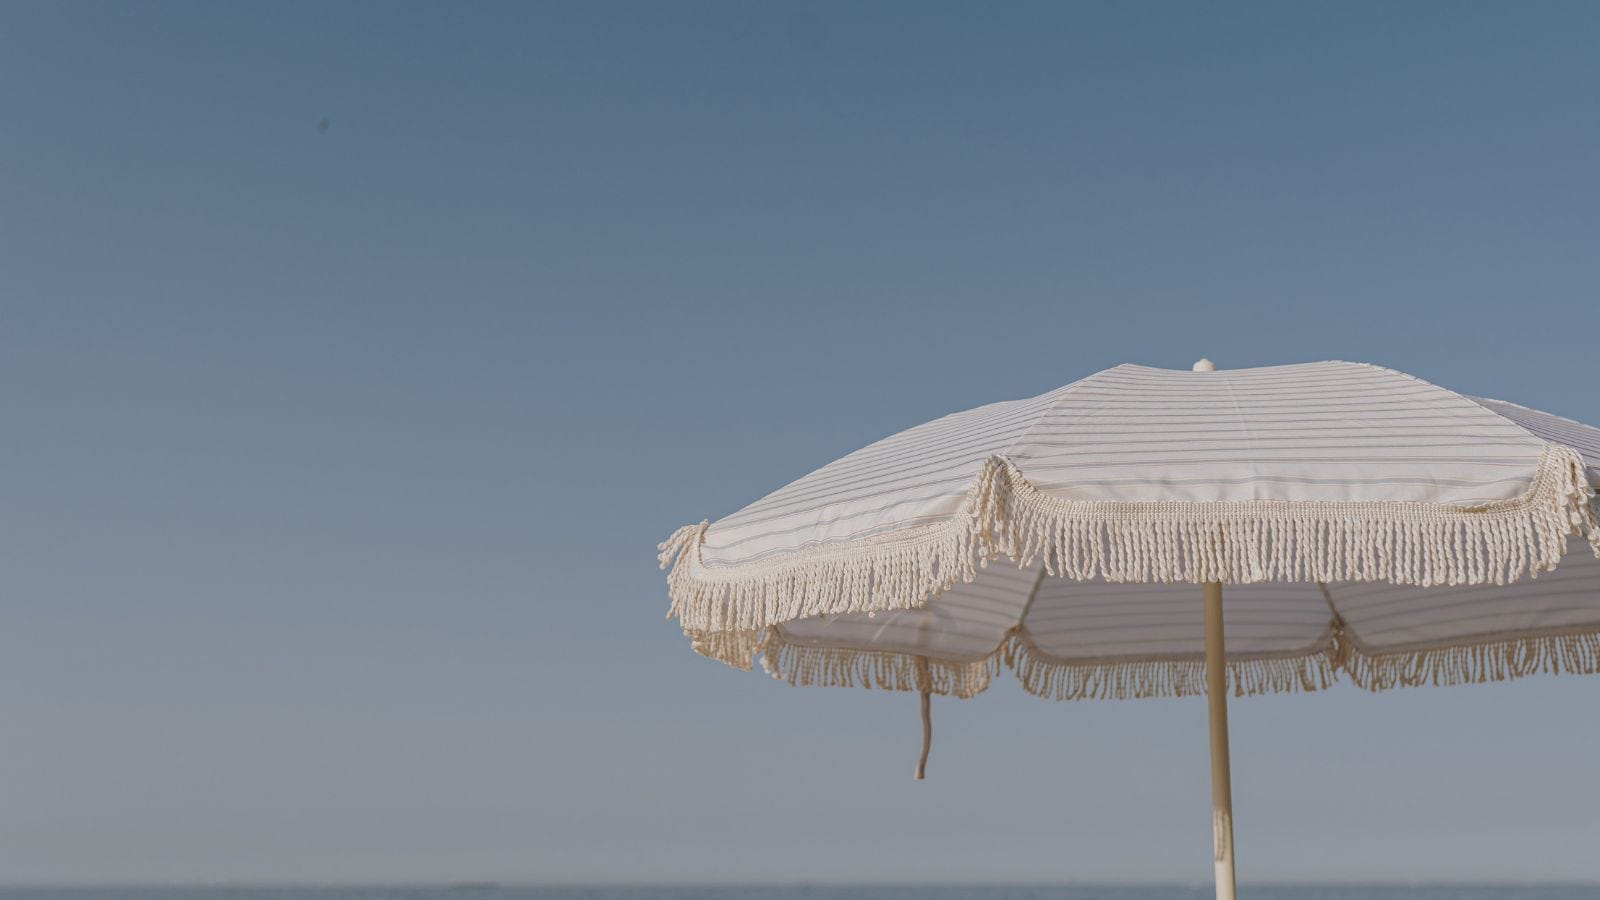 faded image of a beach umbrella against a blue sky